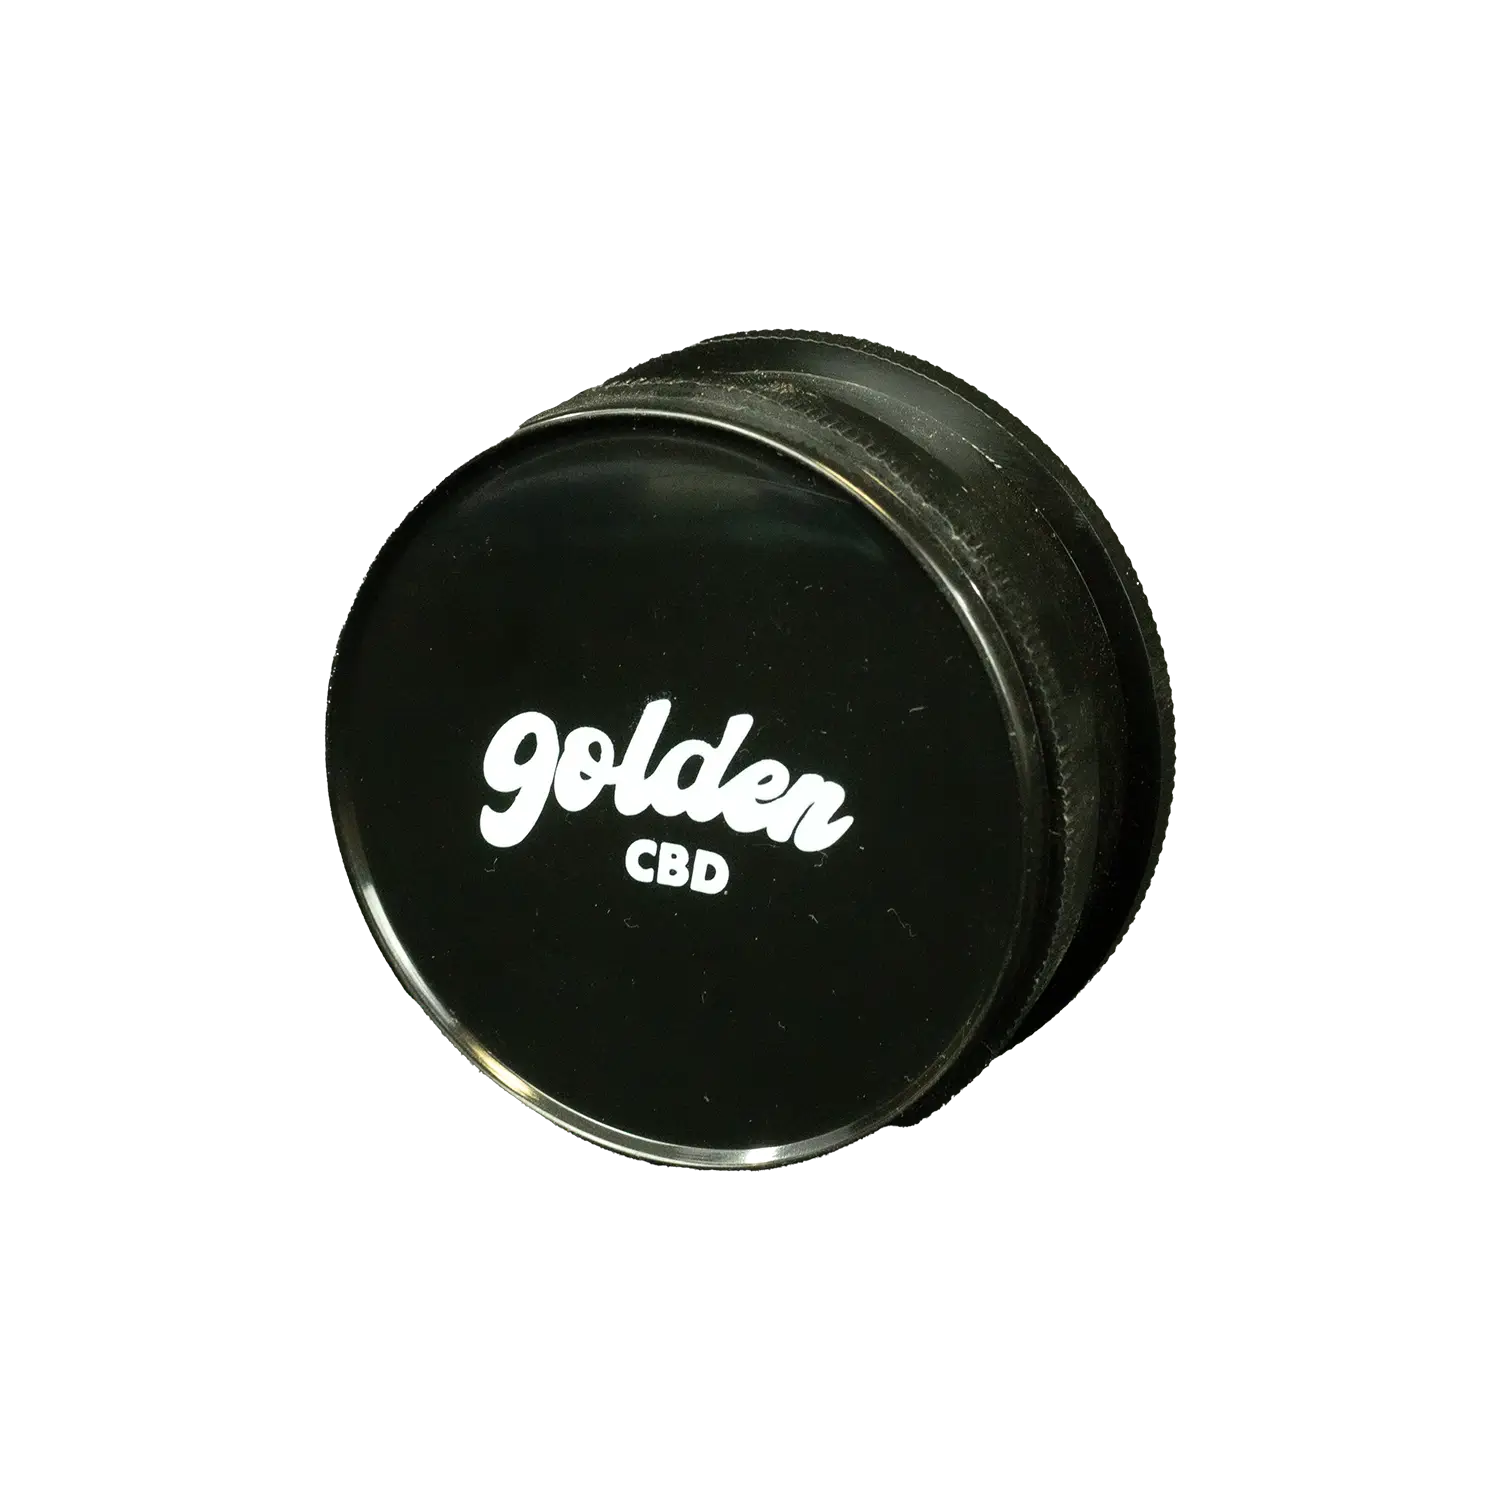 Golden CBD Plastic Grinder